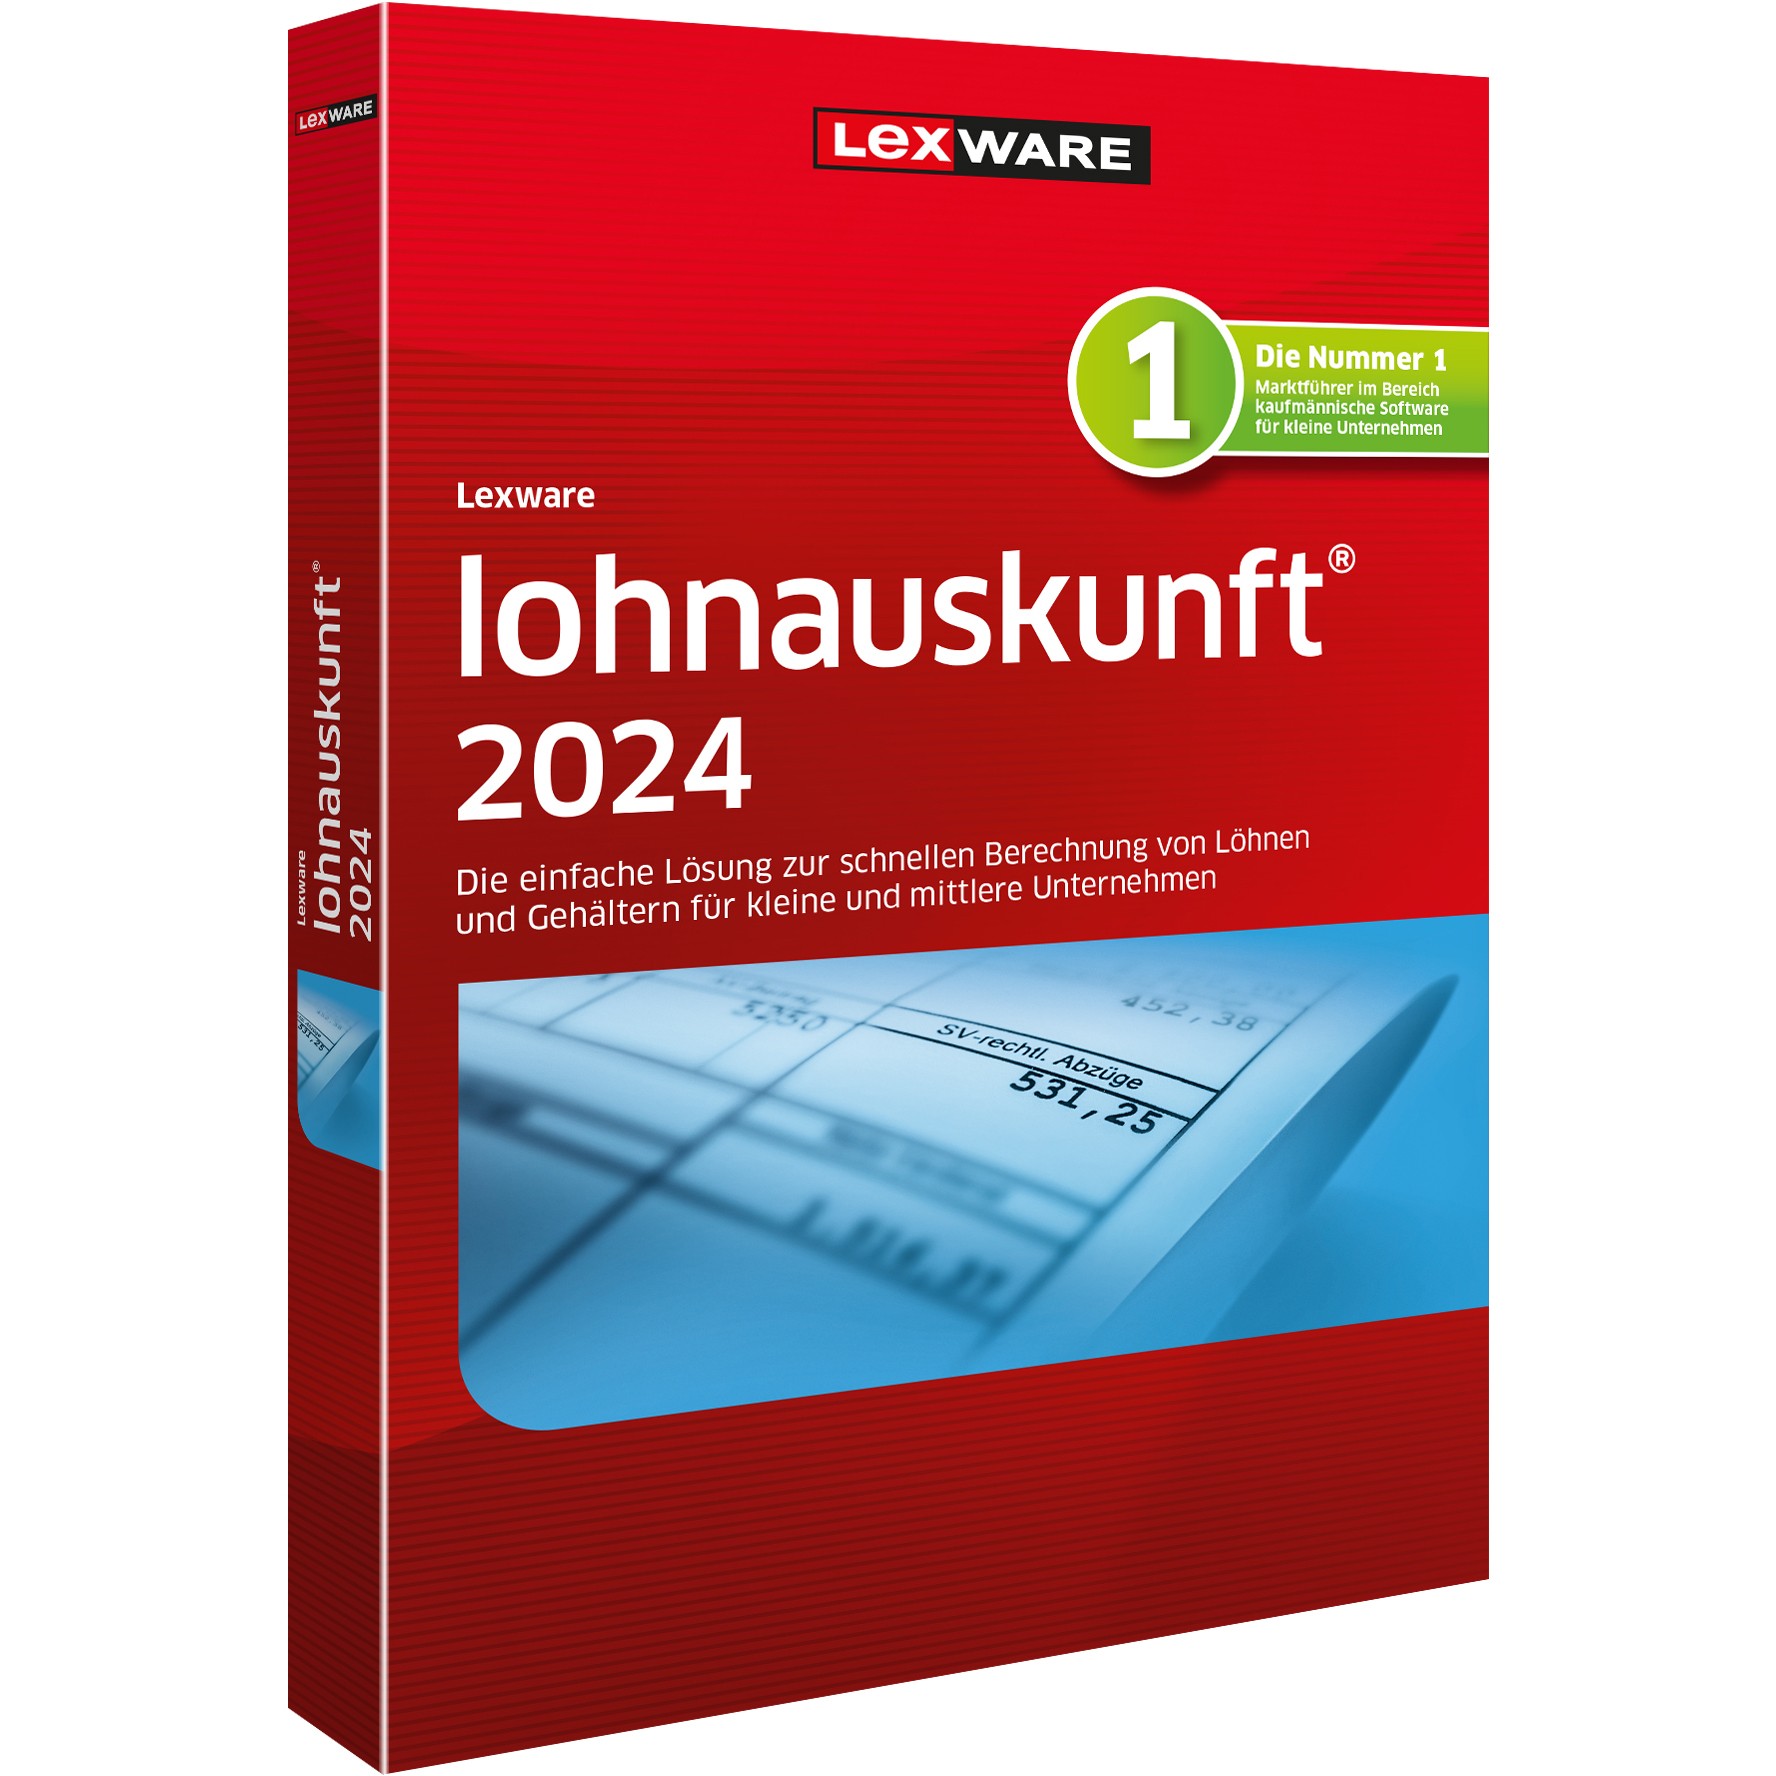 Lexware Lohnauskunft 2024 - 1 Devise. ABO - ESD -DownloadESD